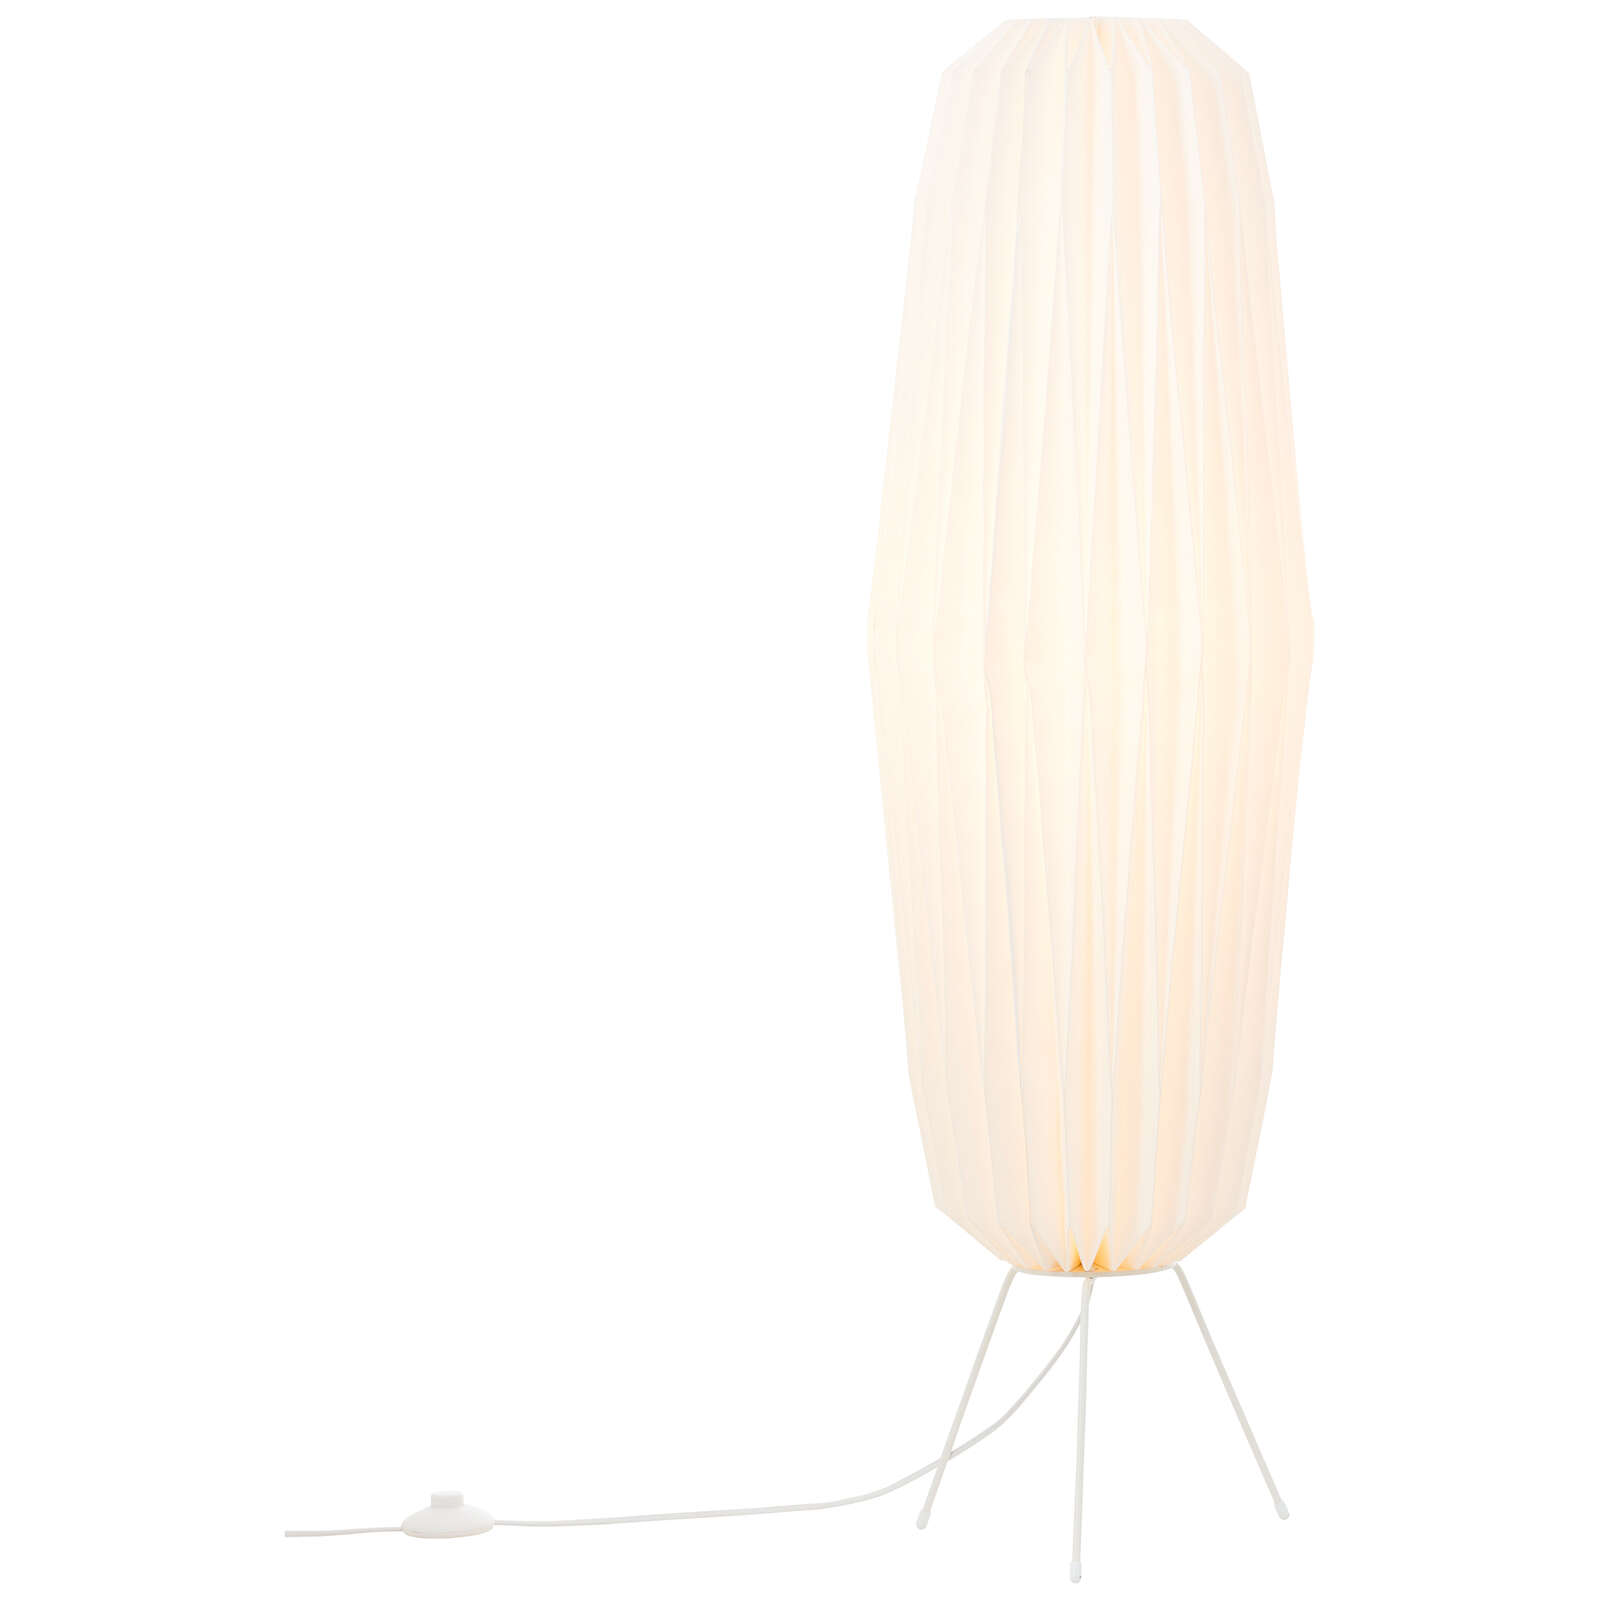             Paper floor lamp - Julia - White
        